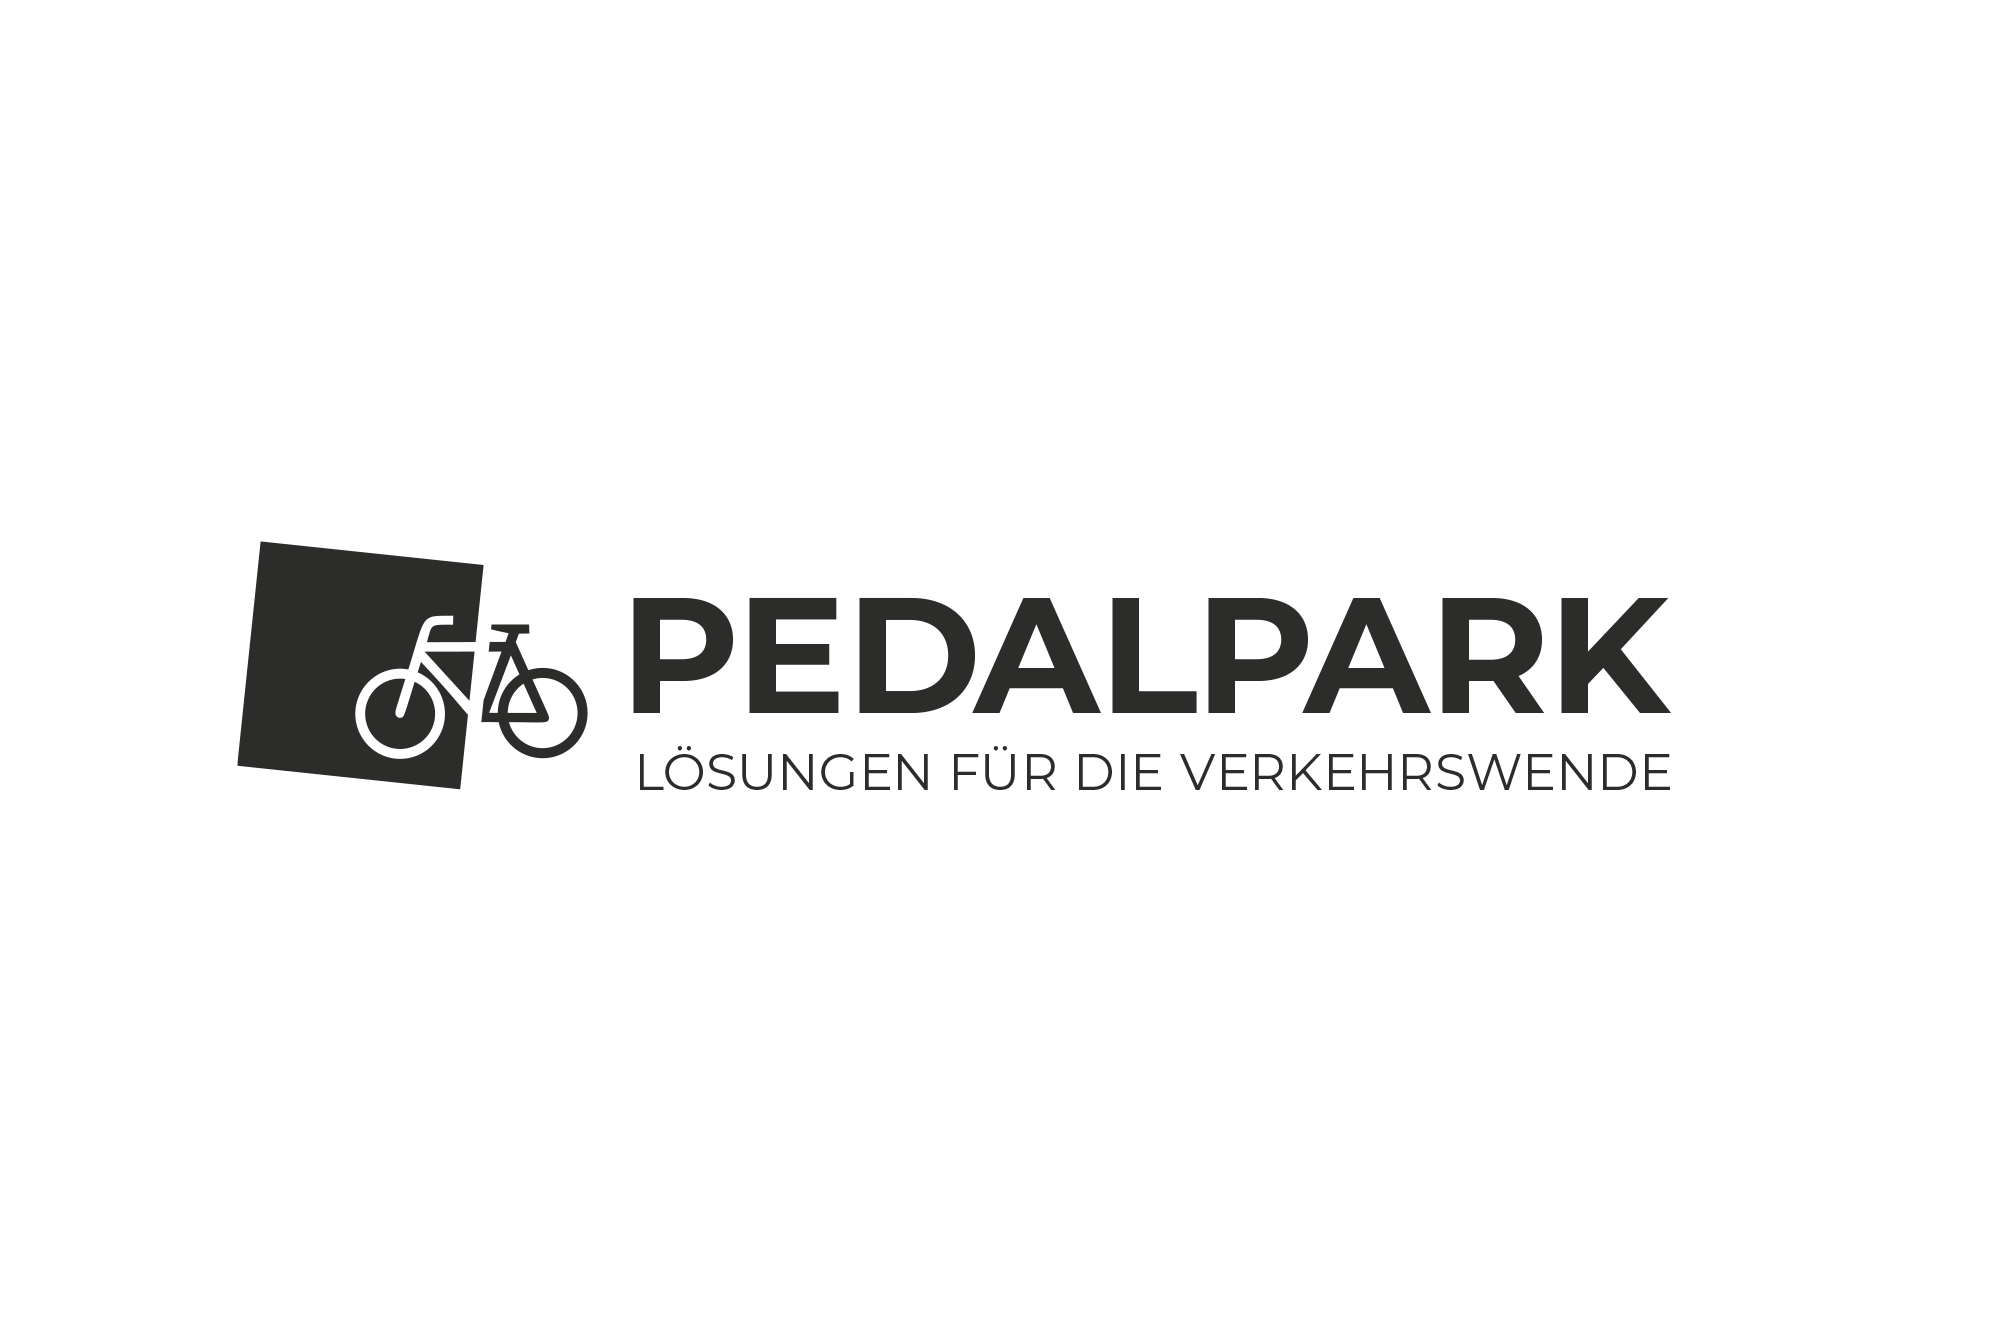 johny_modulare-fahrradparkhaus_logo-pedalpark.png